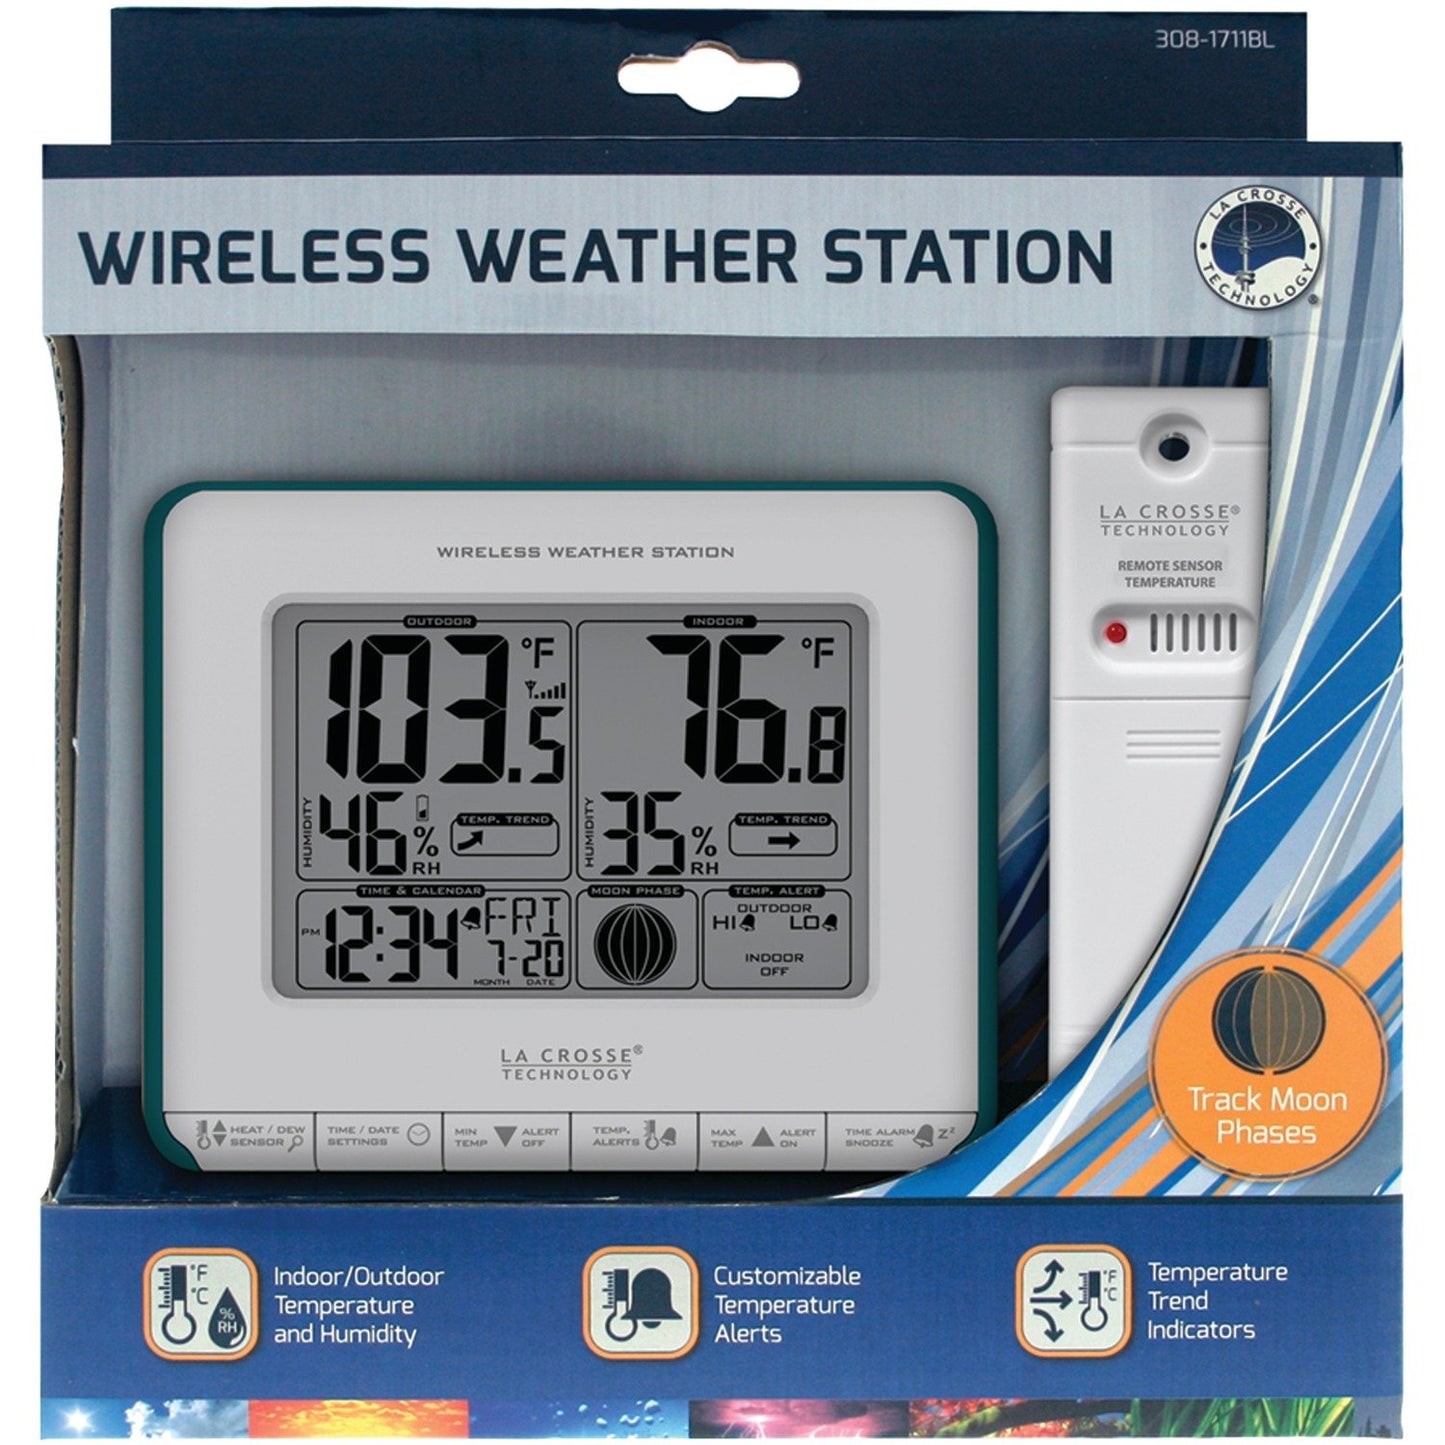 La Crosse Technology 308-1711BL Wireless Weather Station